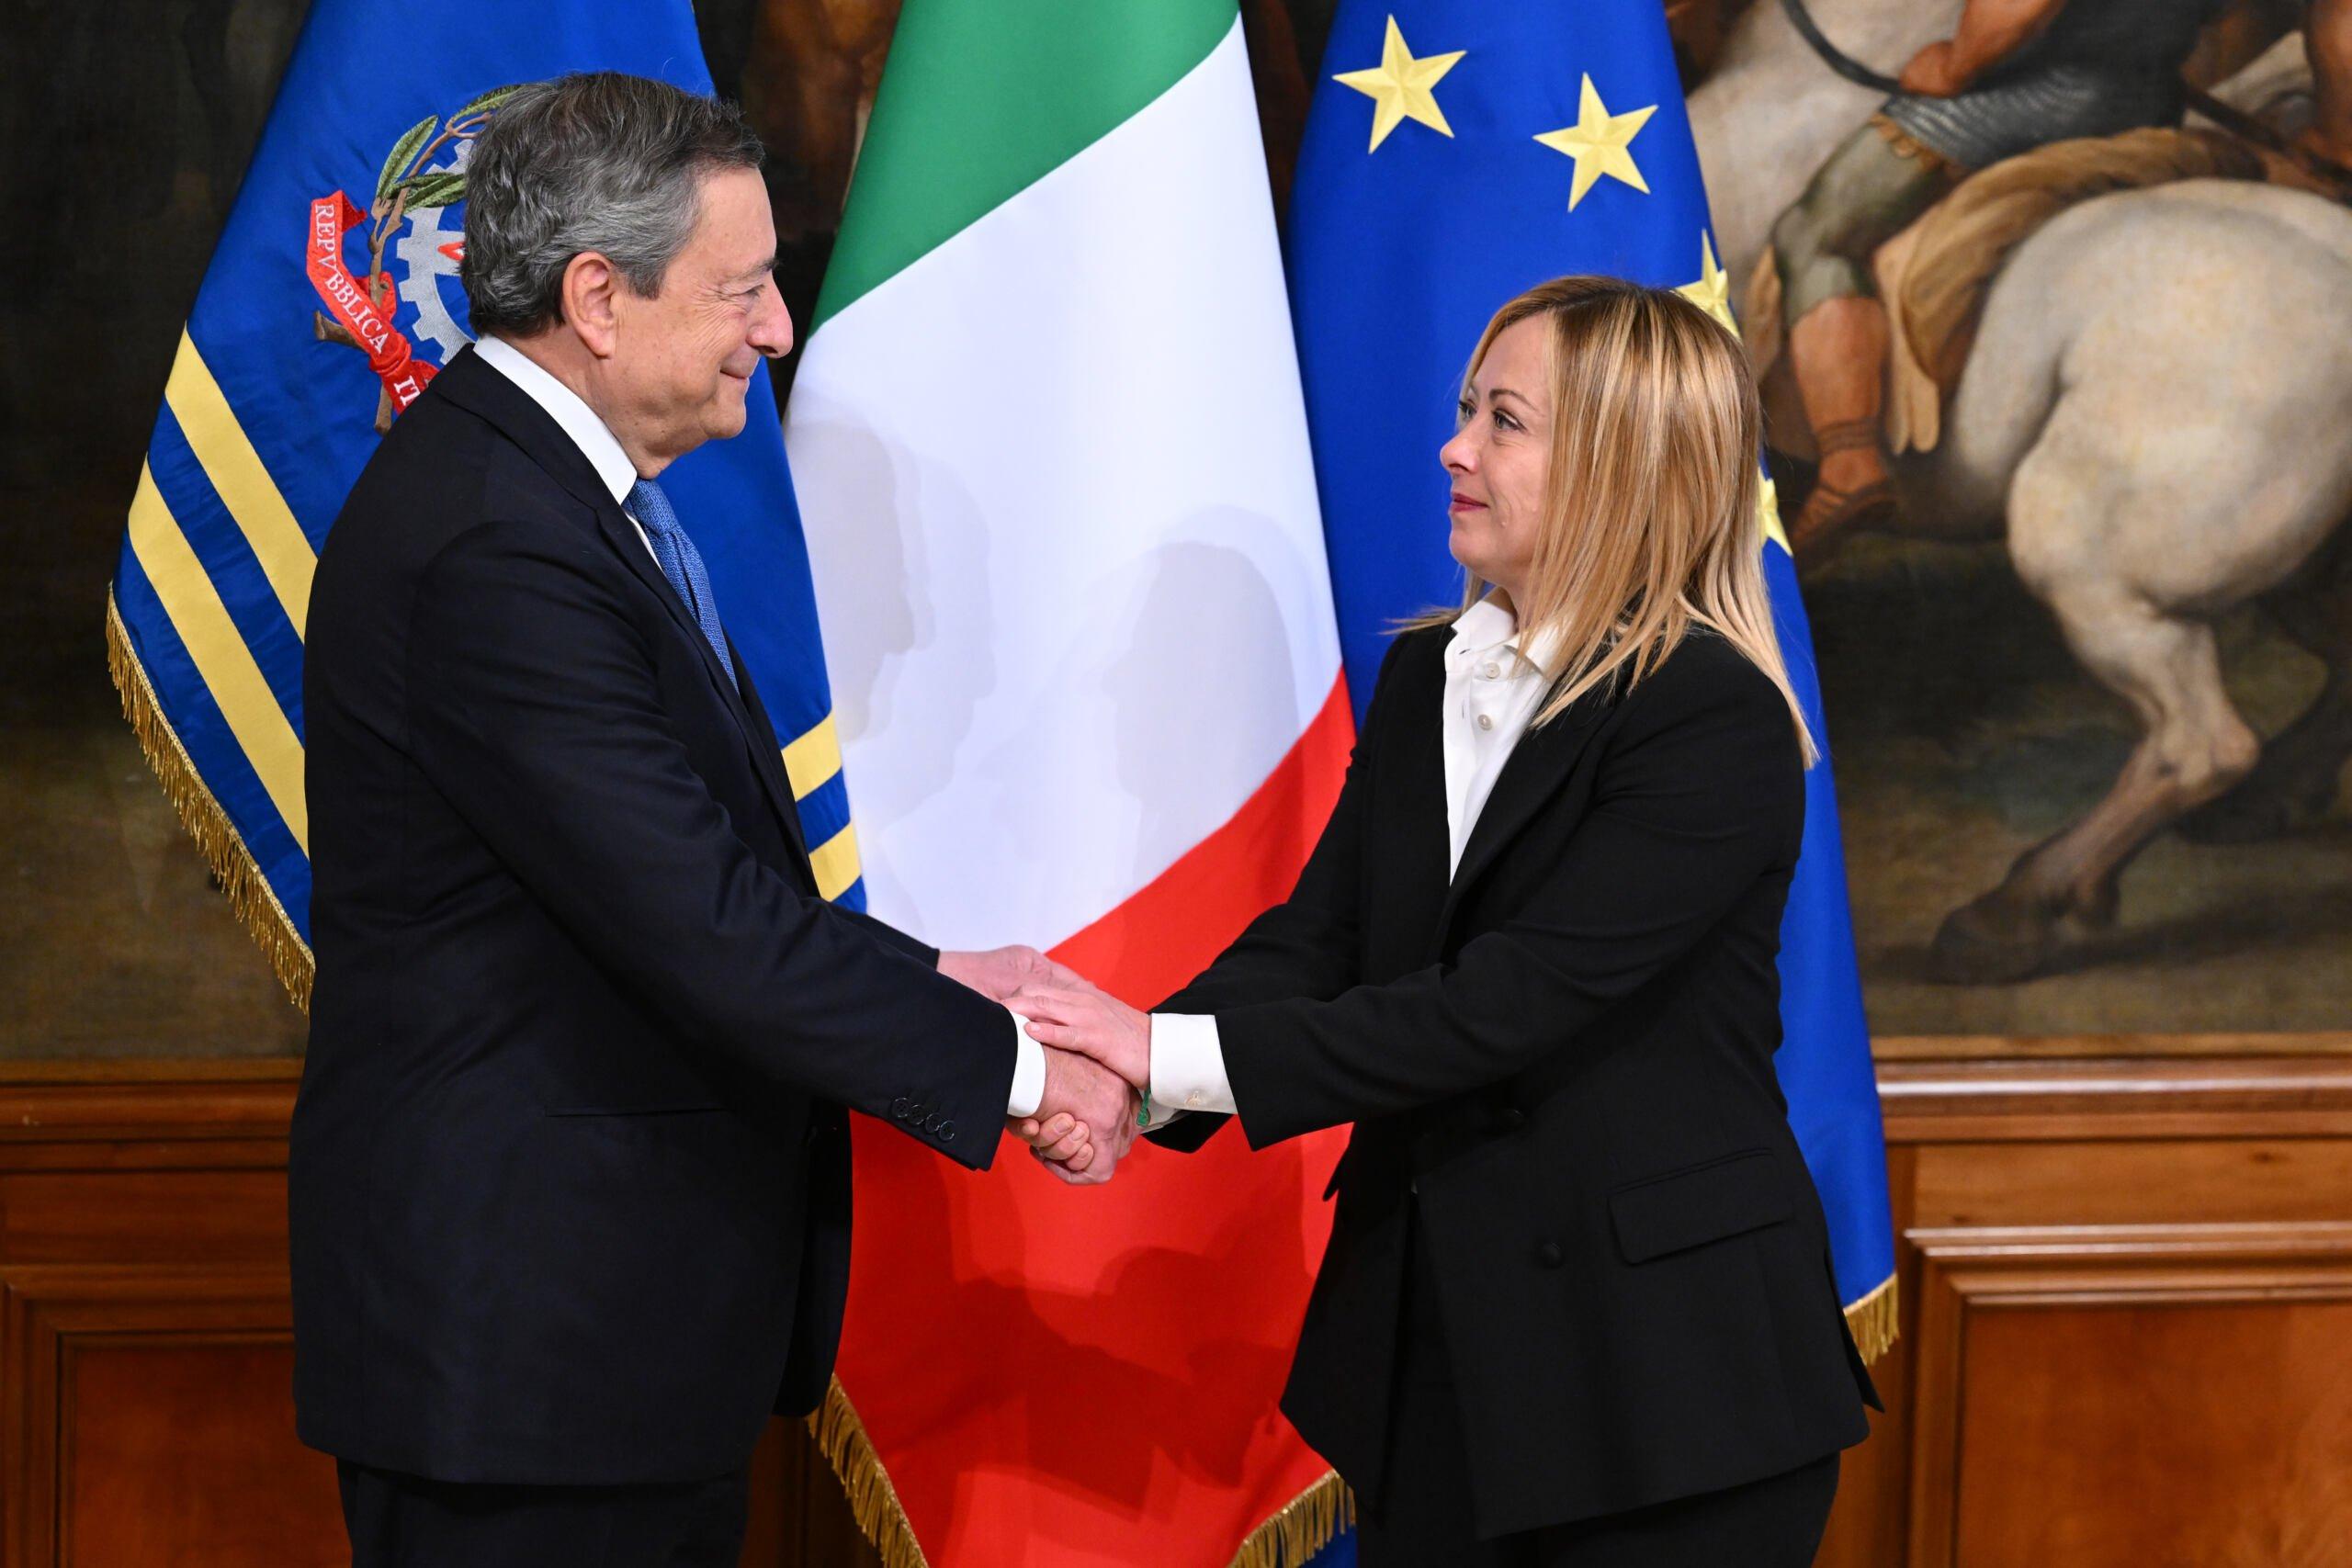 uścisk dłoni Meloni i Draghiego na tle flag Włoch i UE